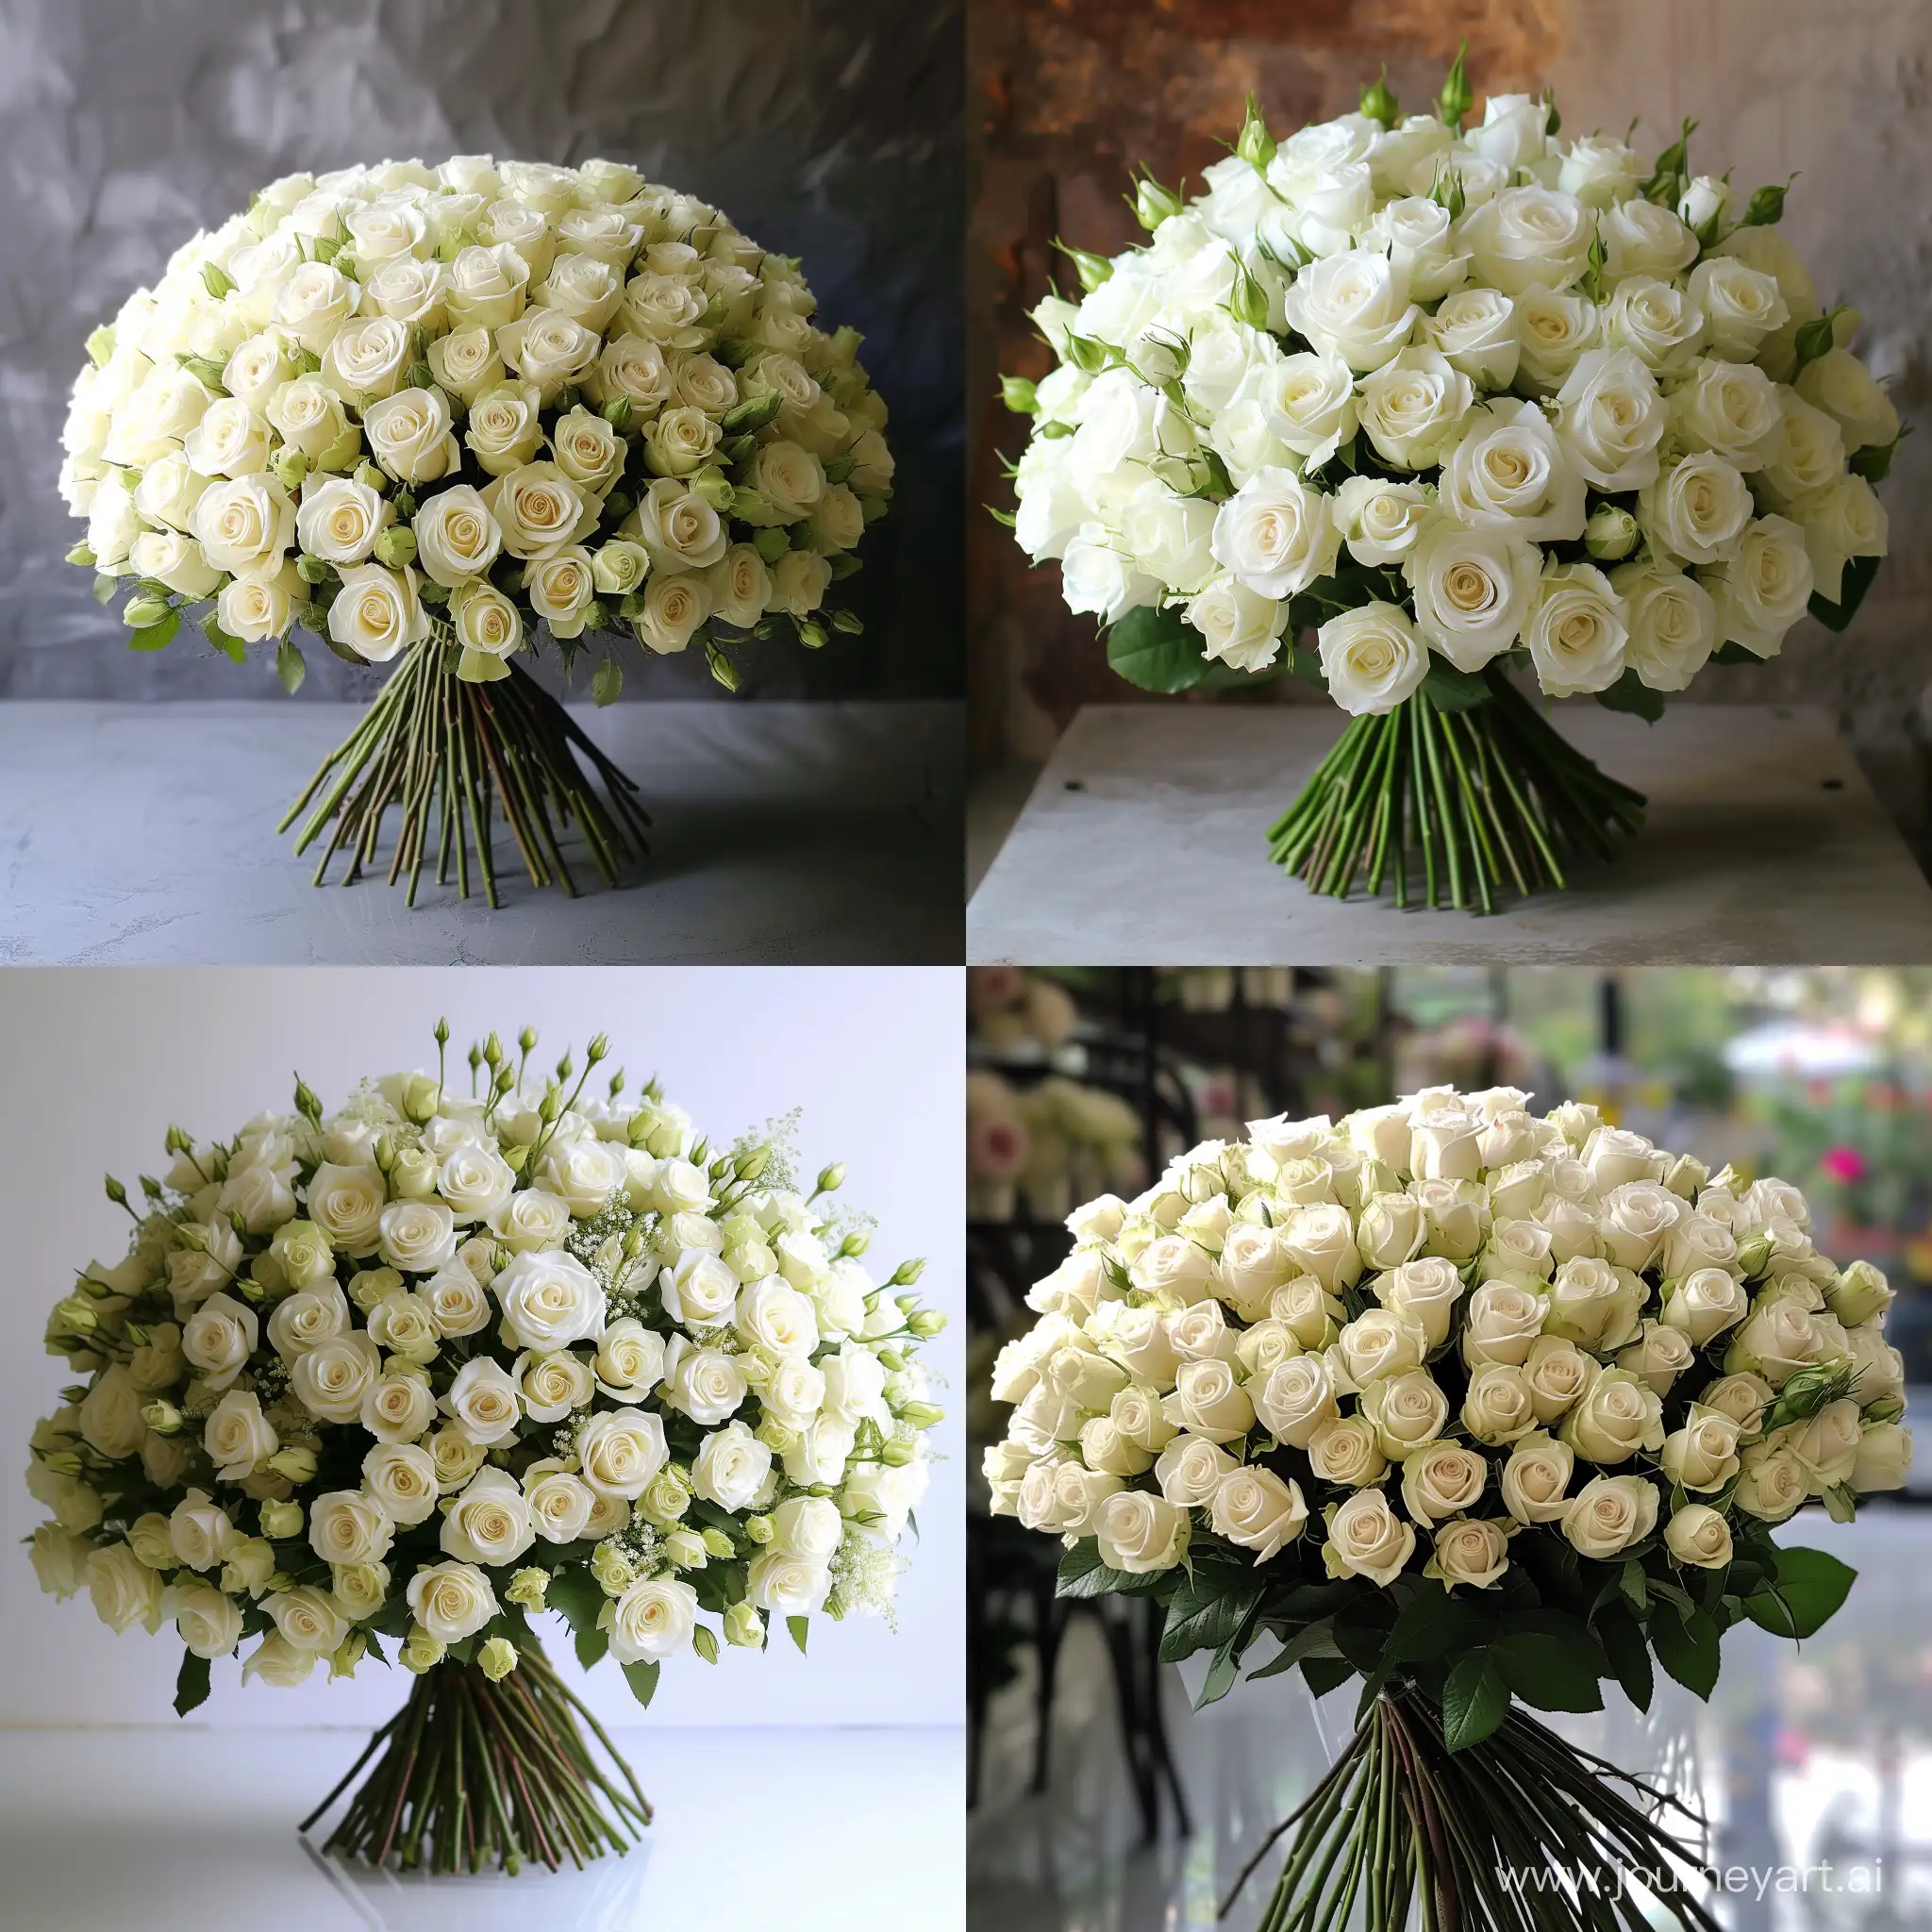 Elegant-White-Roses-Bouquet-A-Stunning-Floral-Arrangement